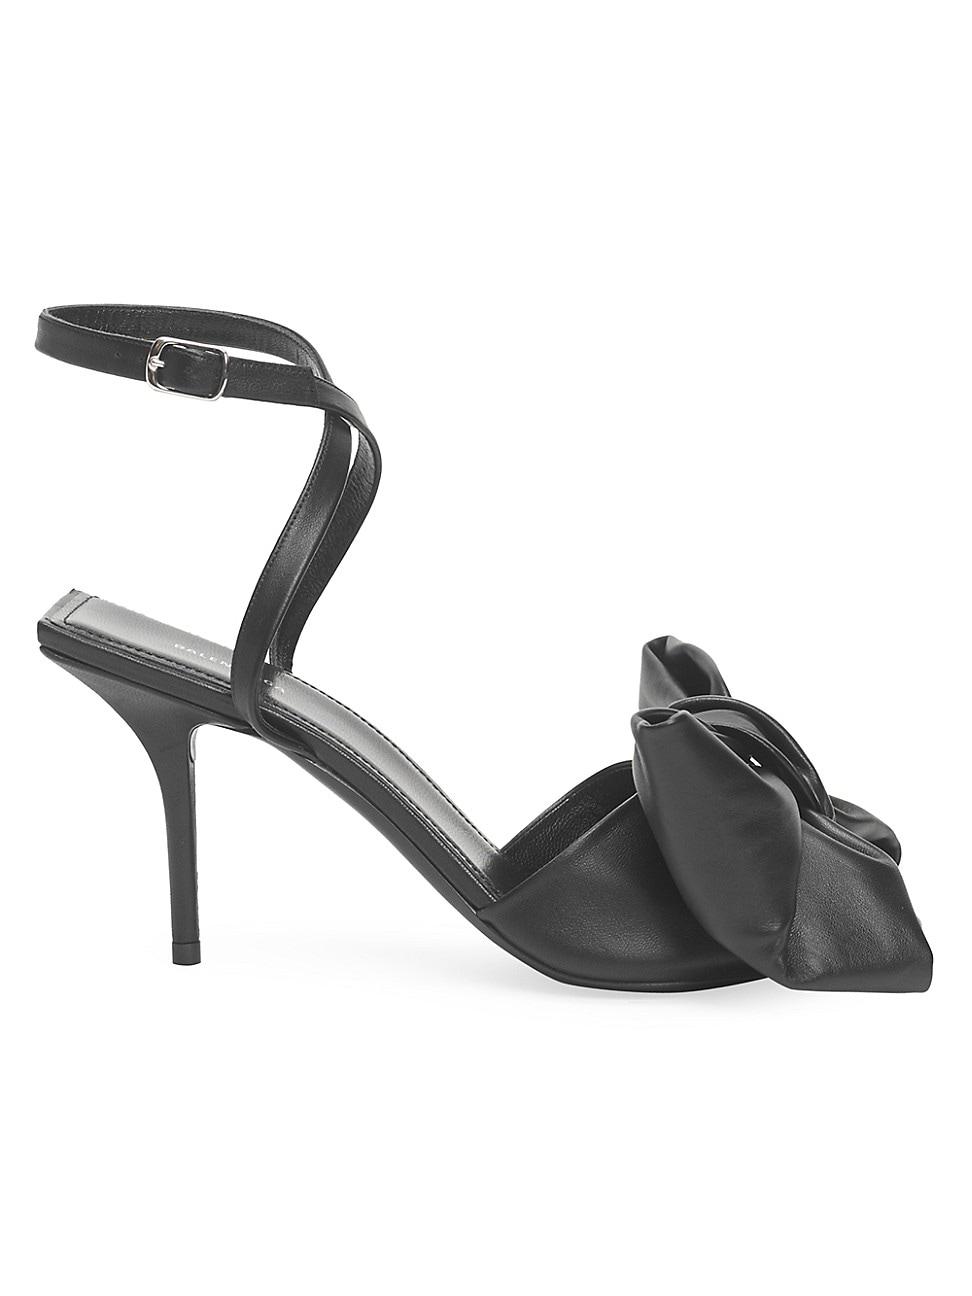 Balenciaga Bow Leather Sandal in Black 